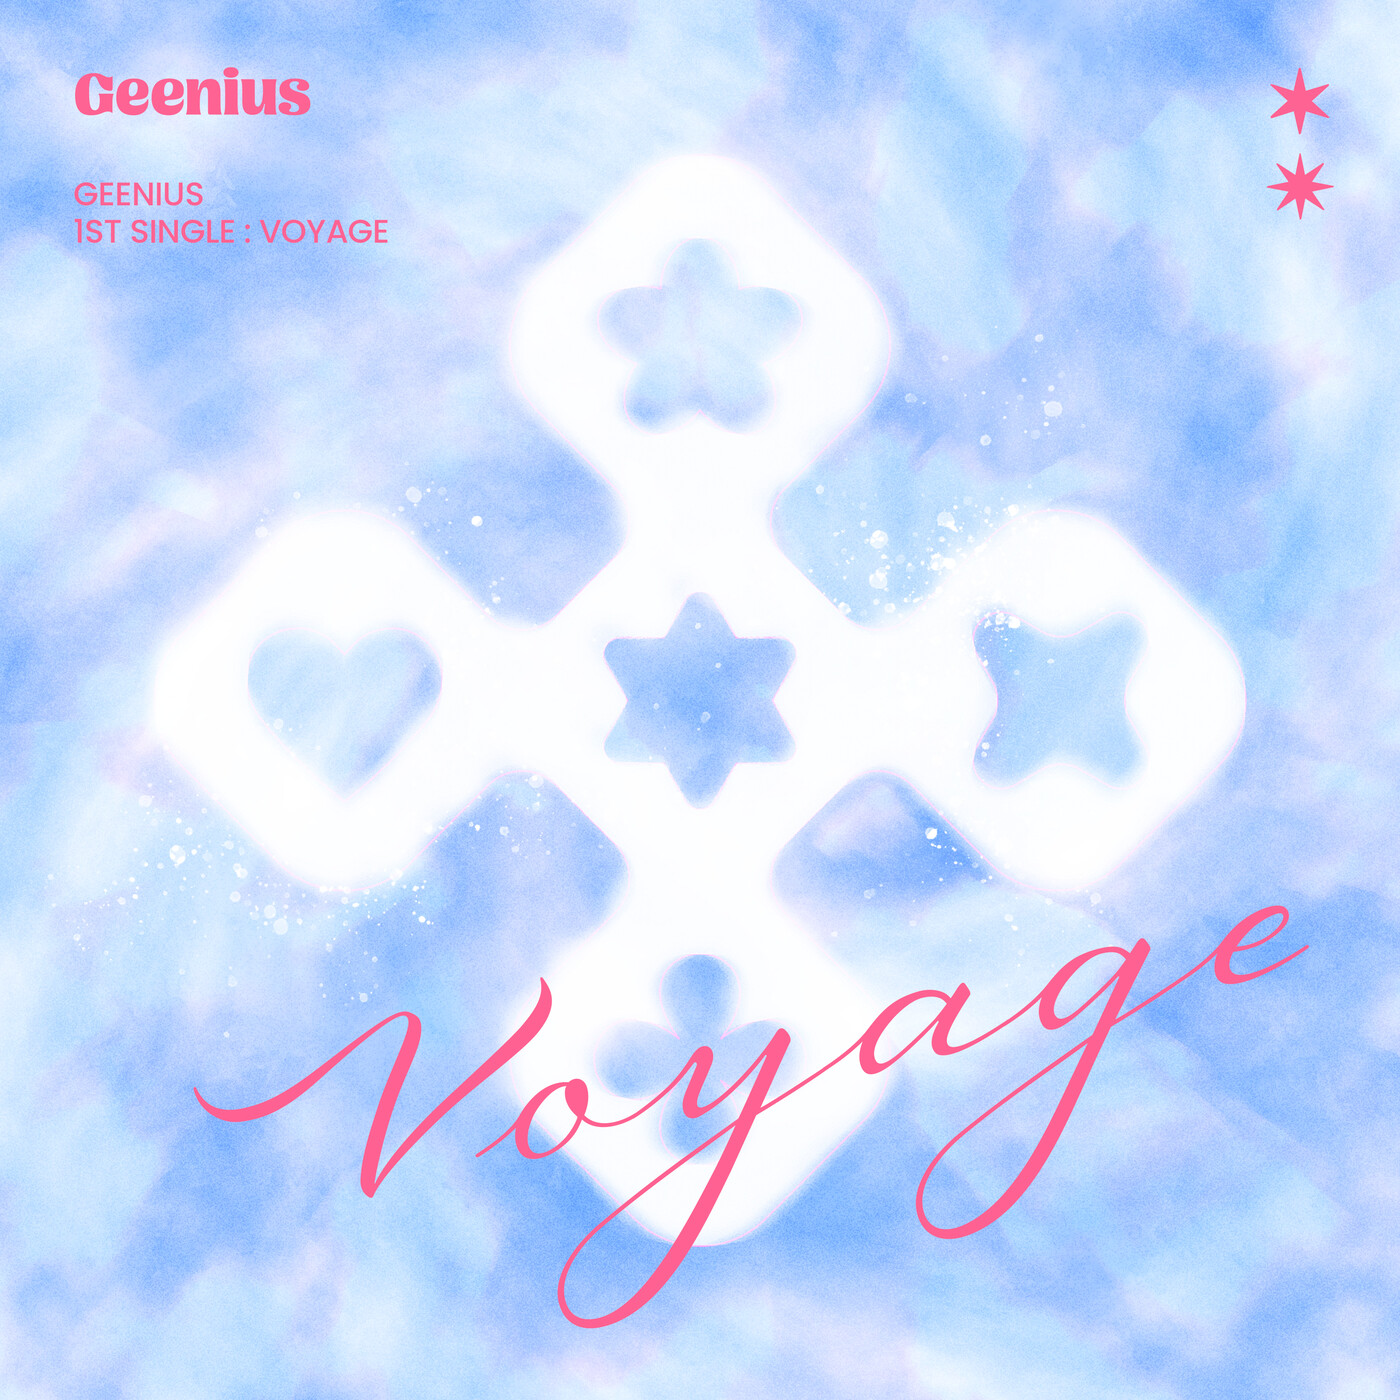 Voyage (Voyage album) - Wikipedia